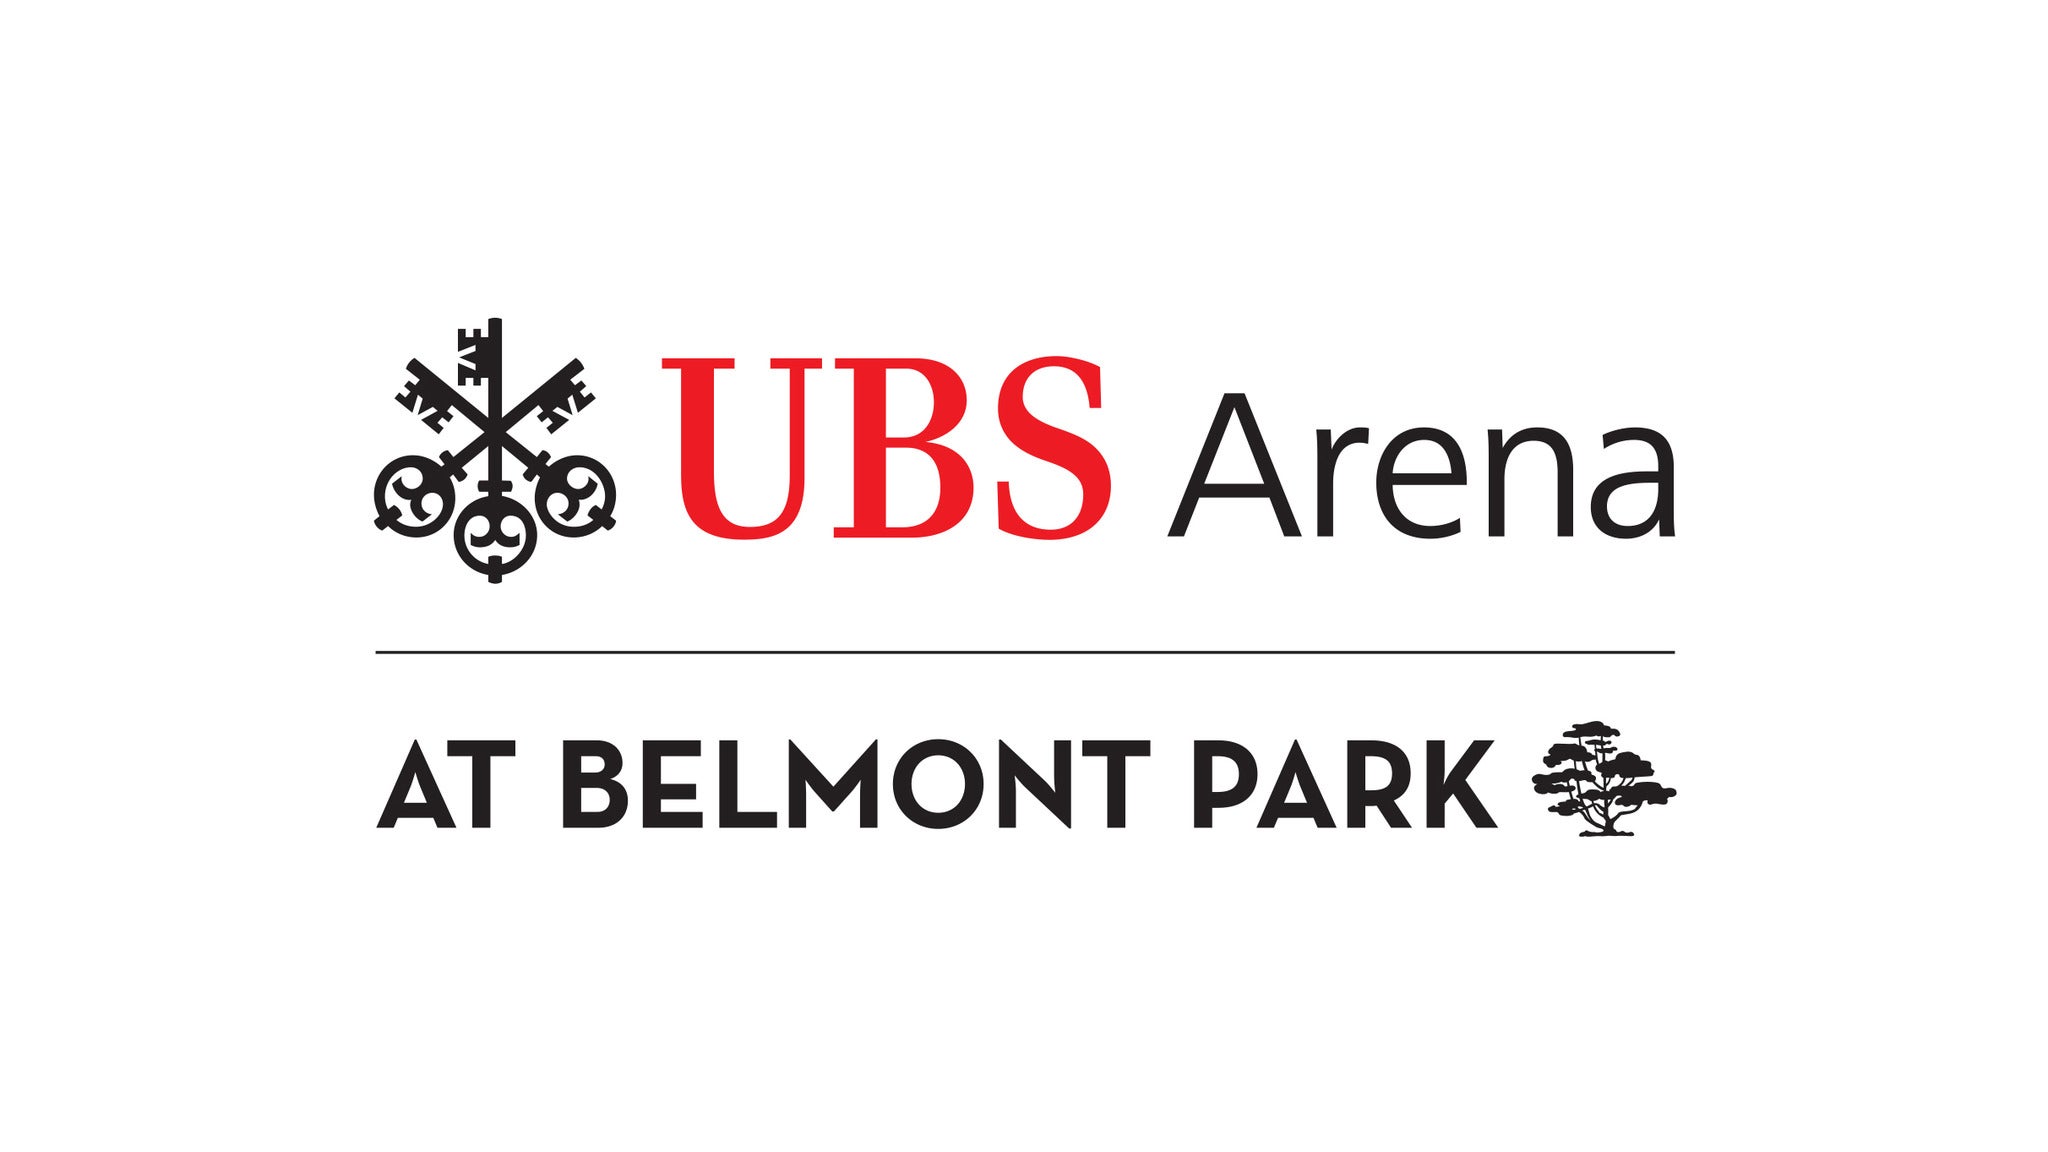 UBS Arena Parking: Disney On Ice in Belmont Park - Long Island promo photo for Internet presale offer code